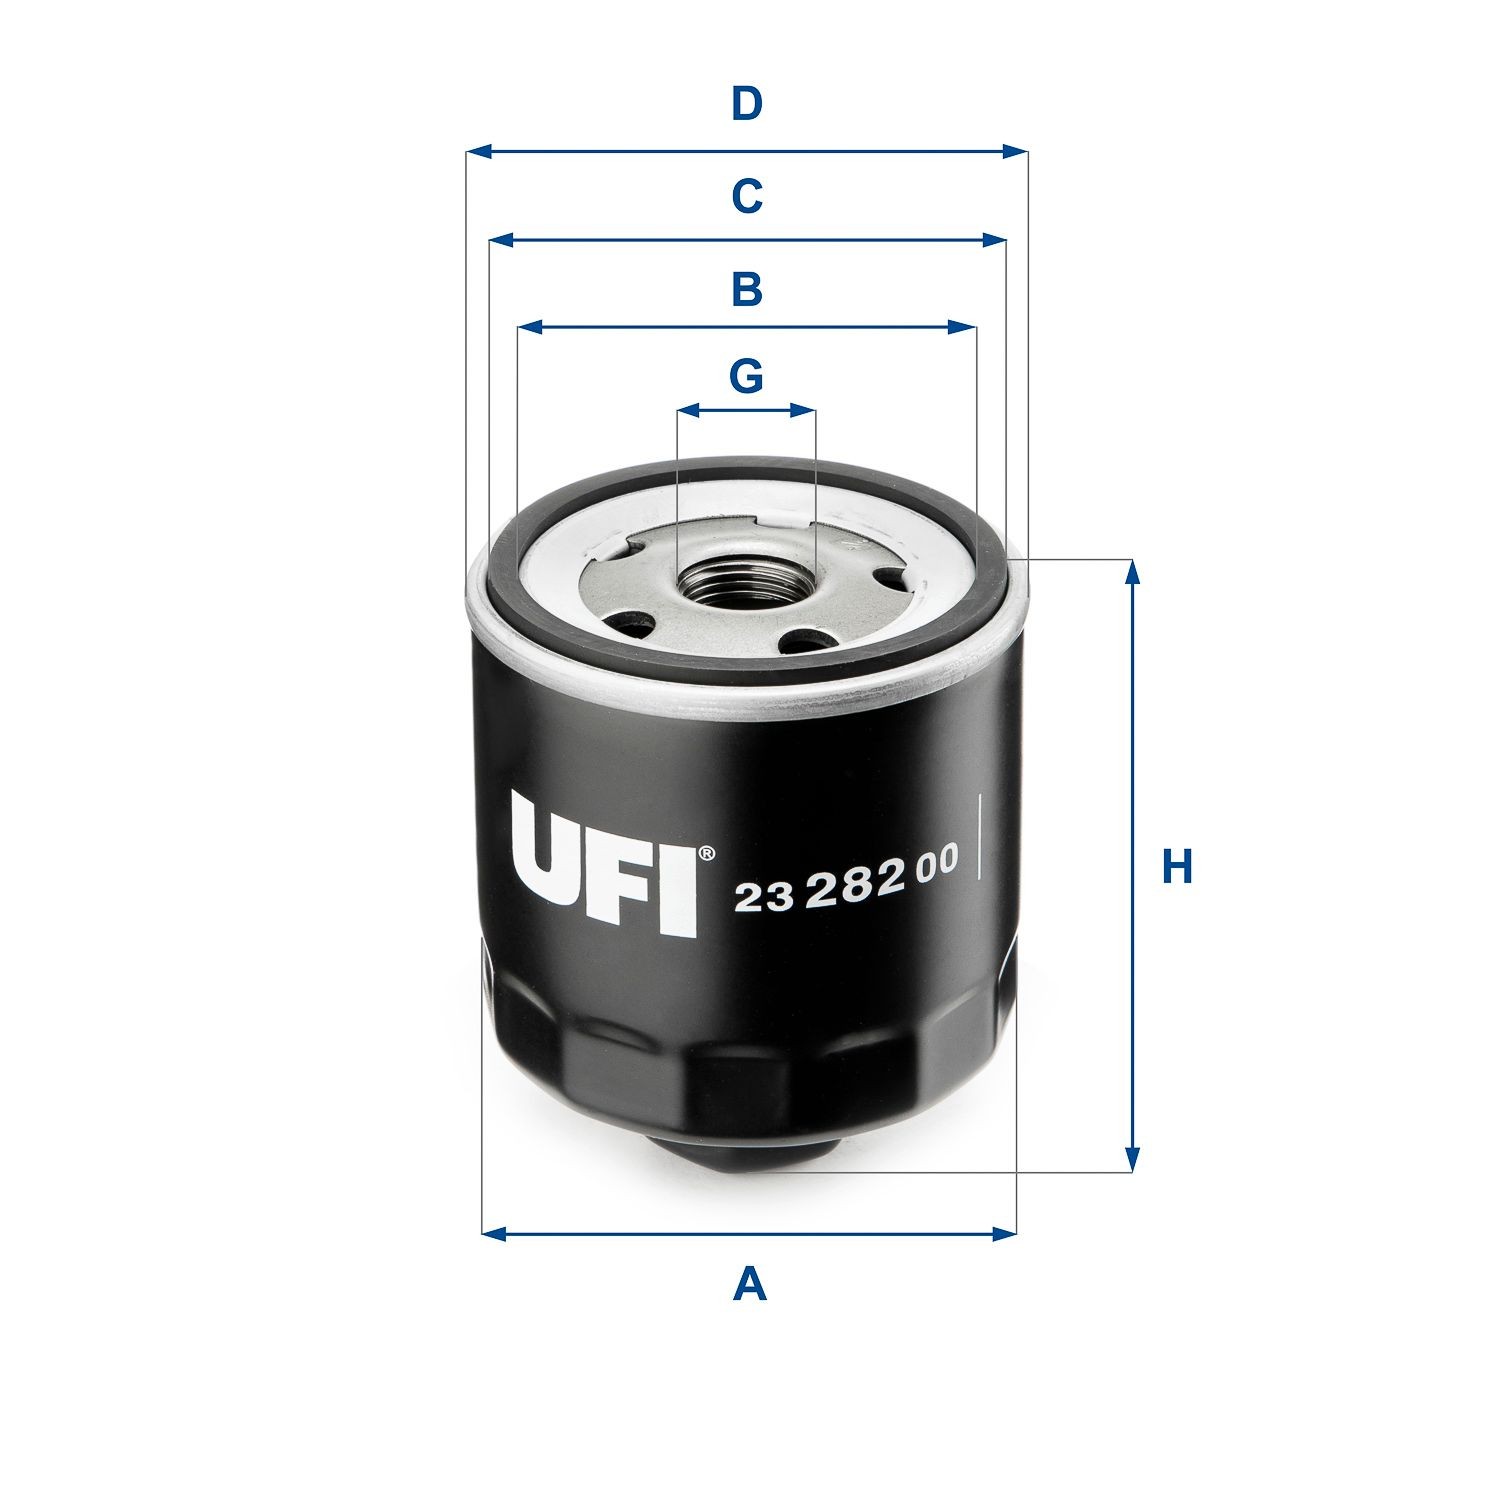 UFI 23.282.00 Motorölfilter 3/4-16 UNF, mit einem Rücklaufsperrventil, Anschraubfilter